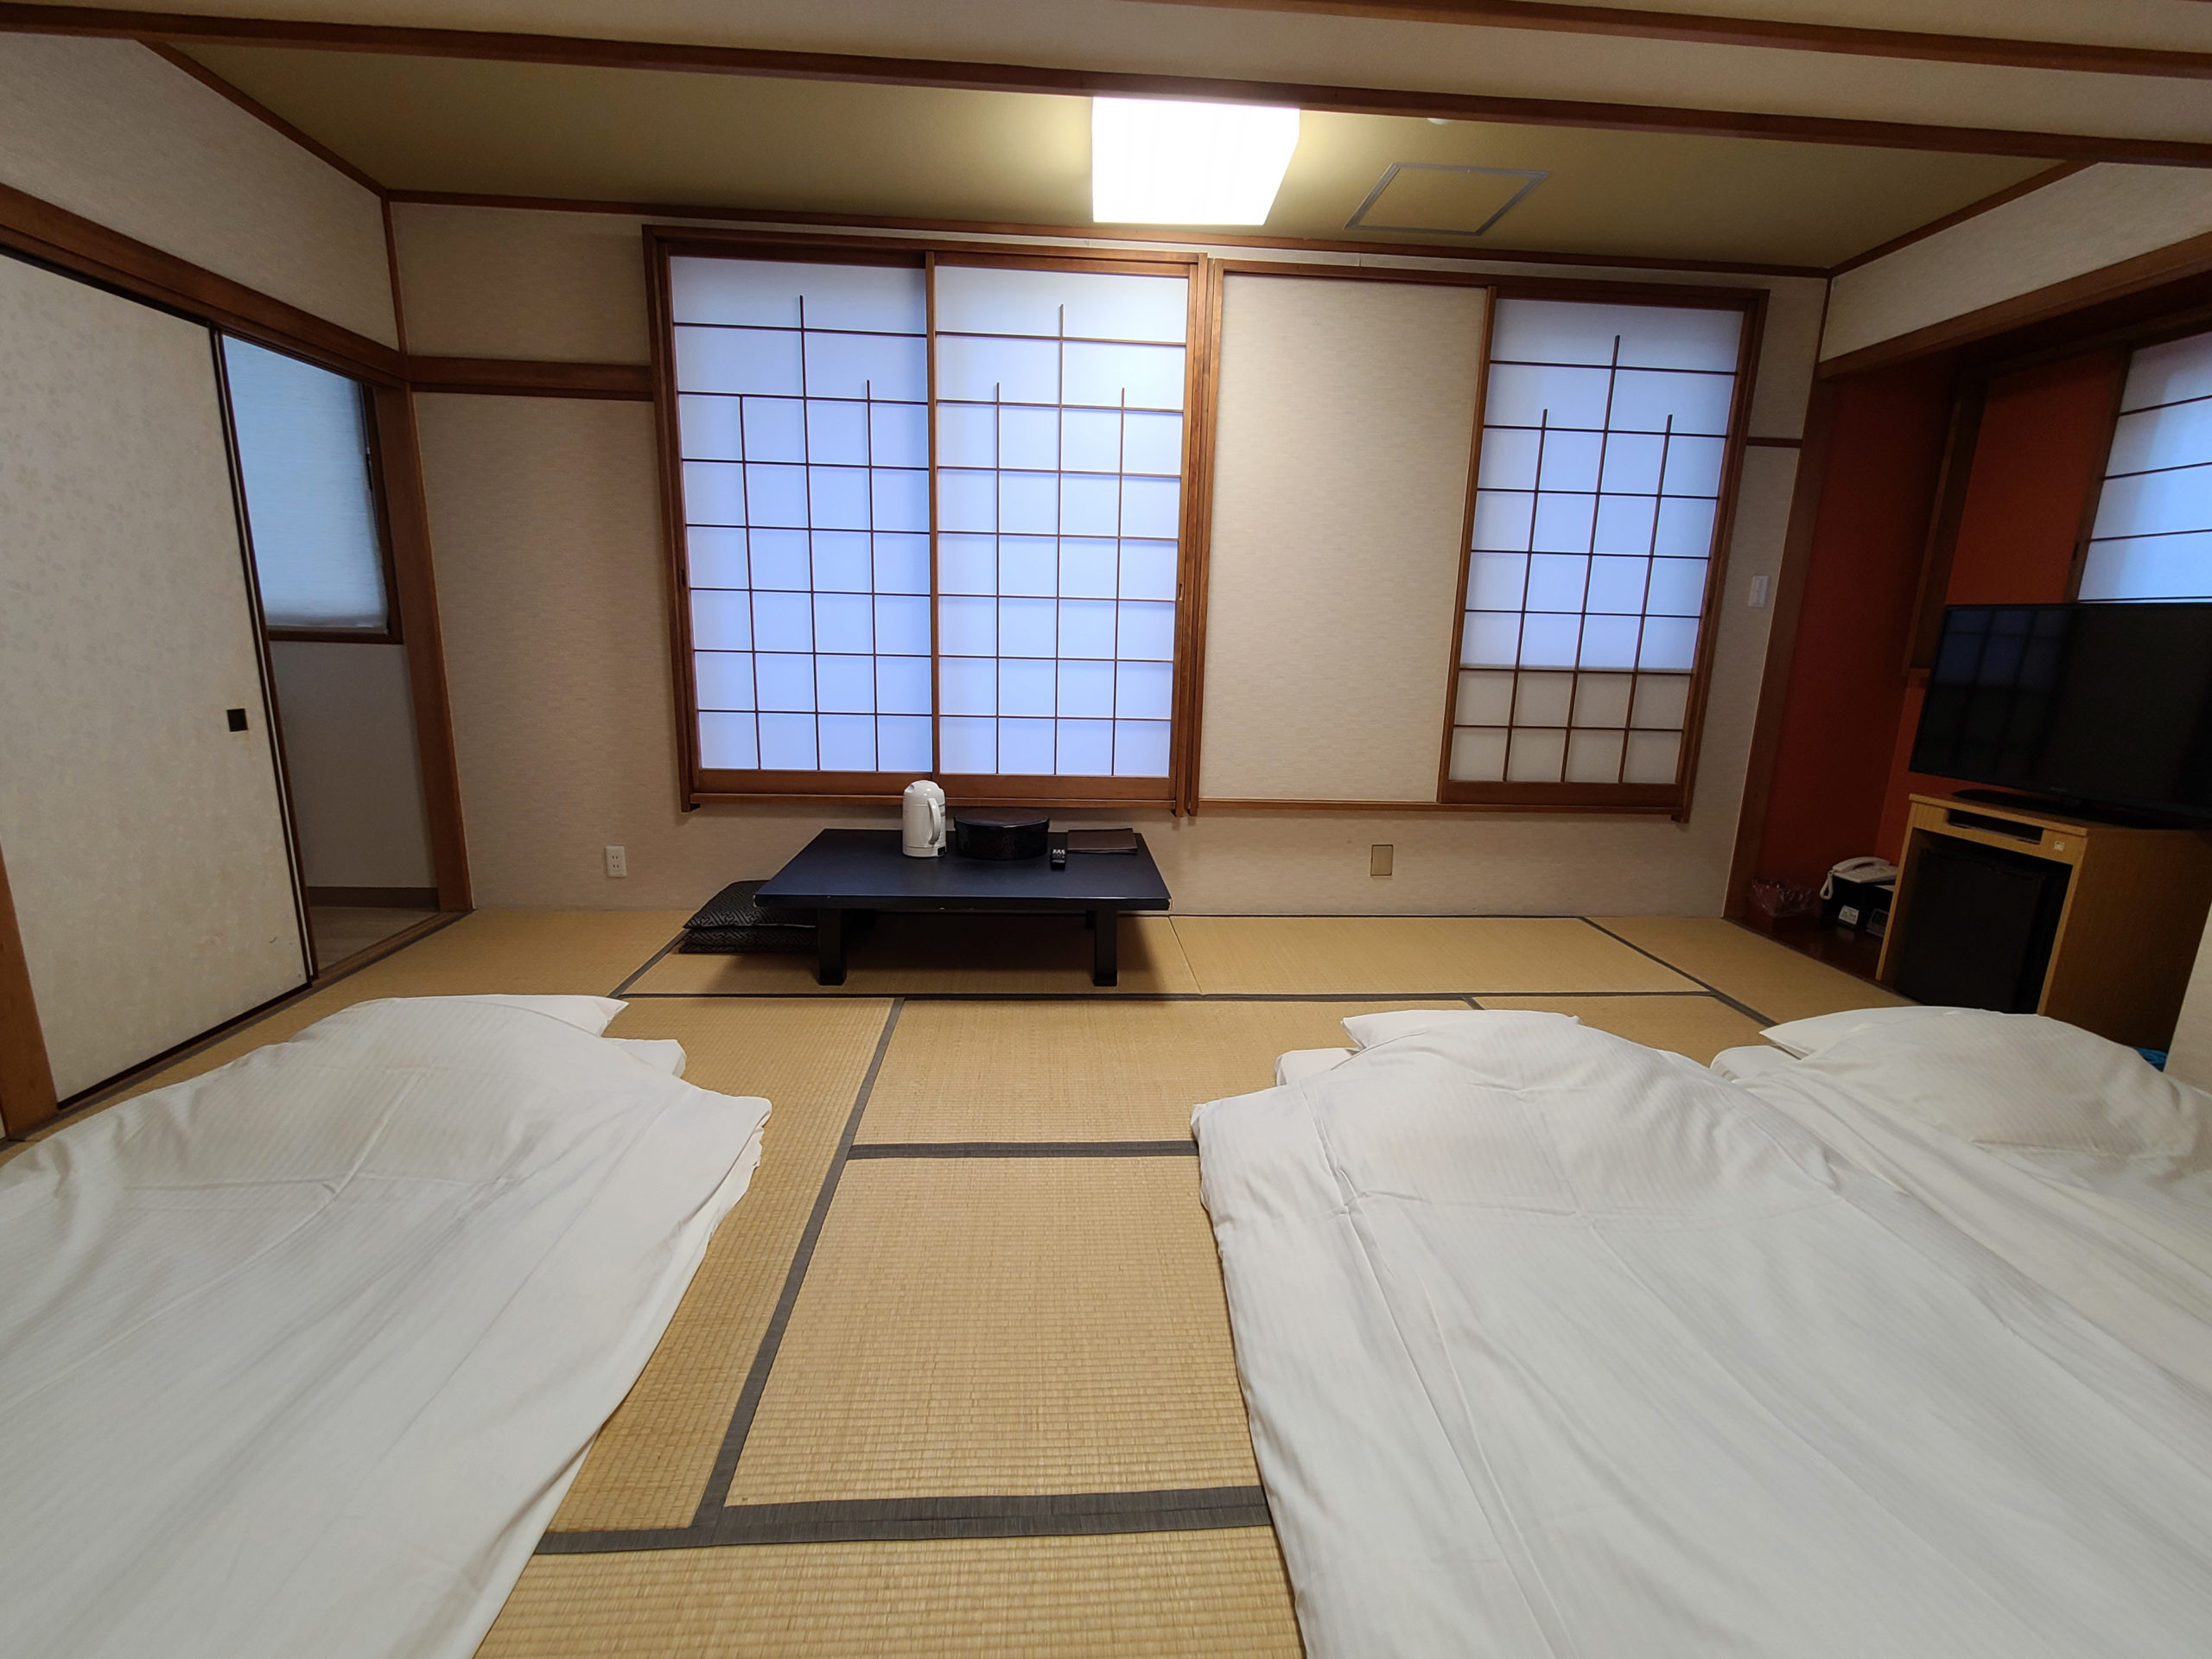 A traditional Japanese tatami room